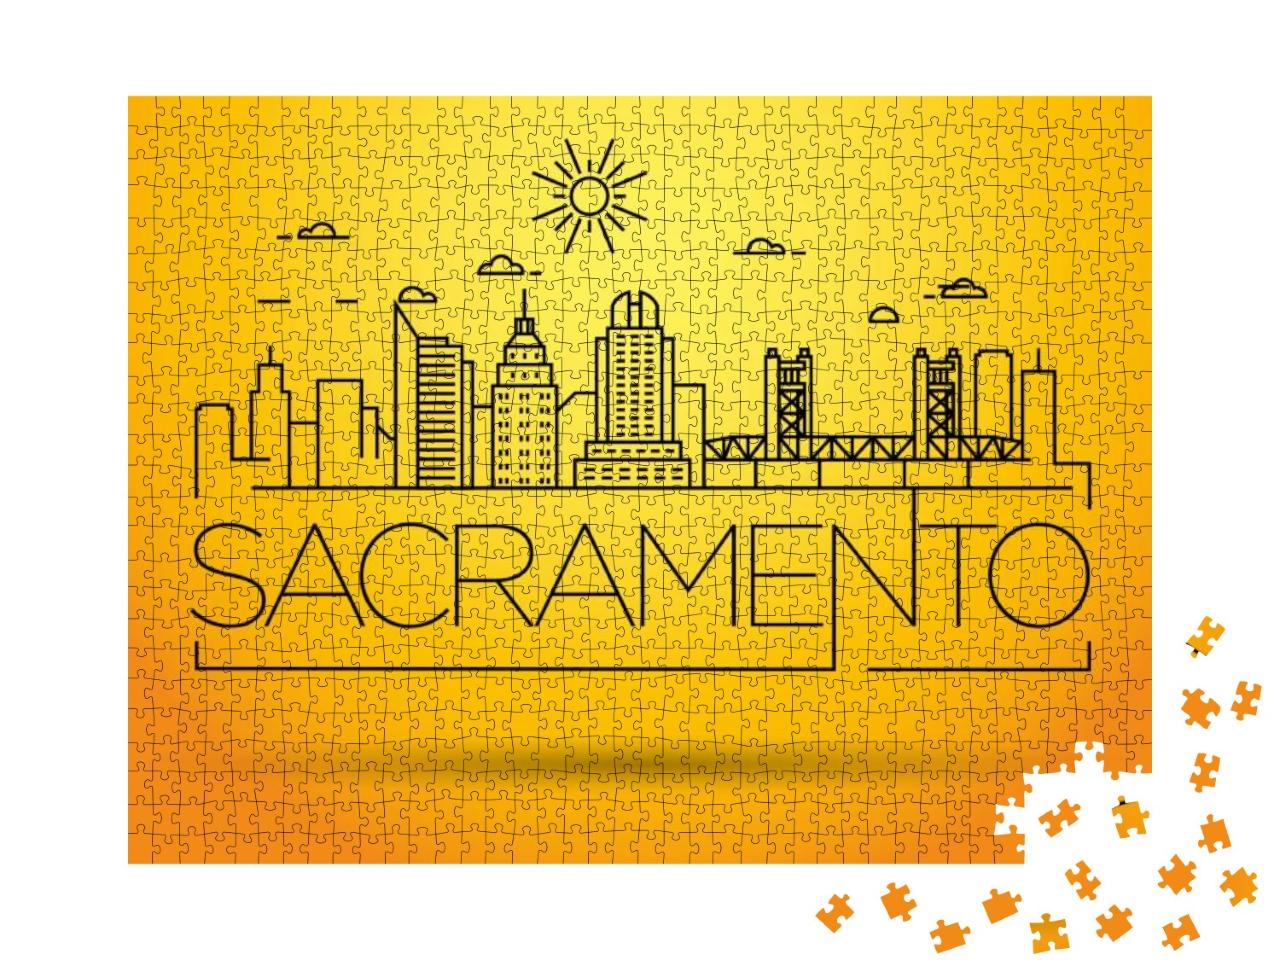 Minimal Sacramento Linear City Skyline with Typographic D... Jigsaw Puzzle with 1000 pieces